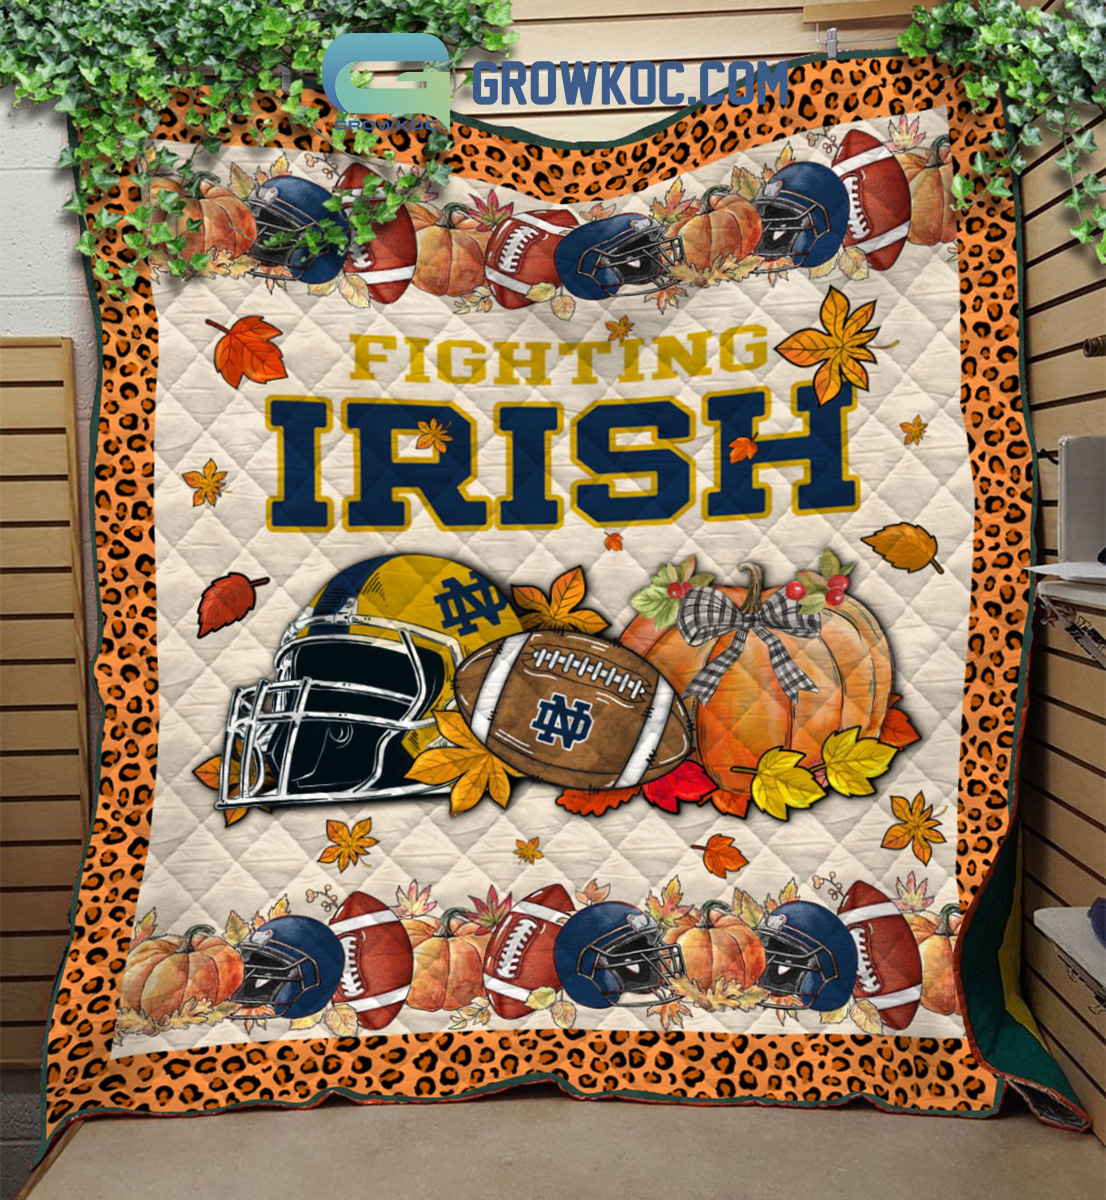 Notre Dame Fighting Irish NCAA Football Welcome Fall Pumpkin Halloween Fleece Blanket Quilt